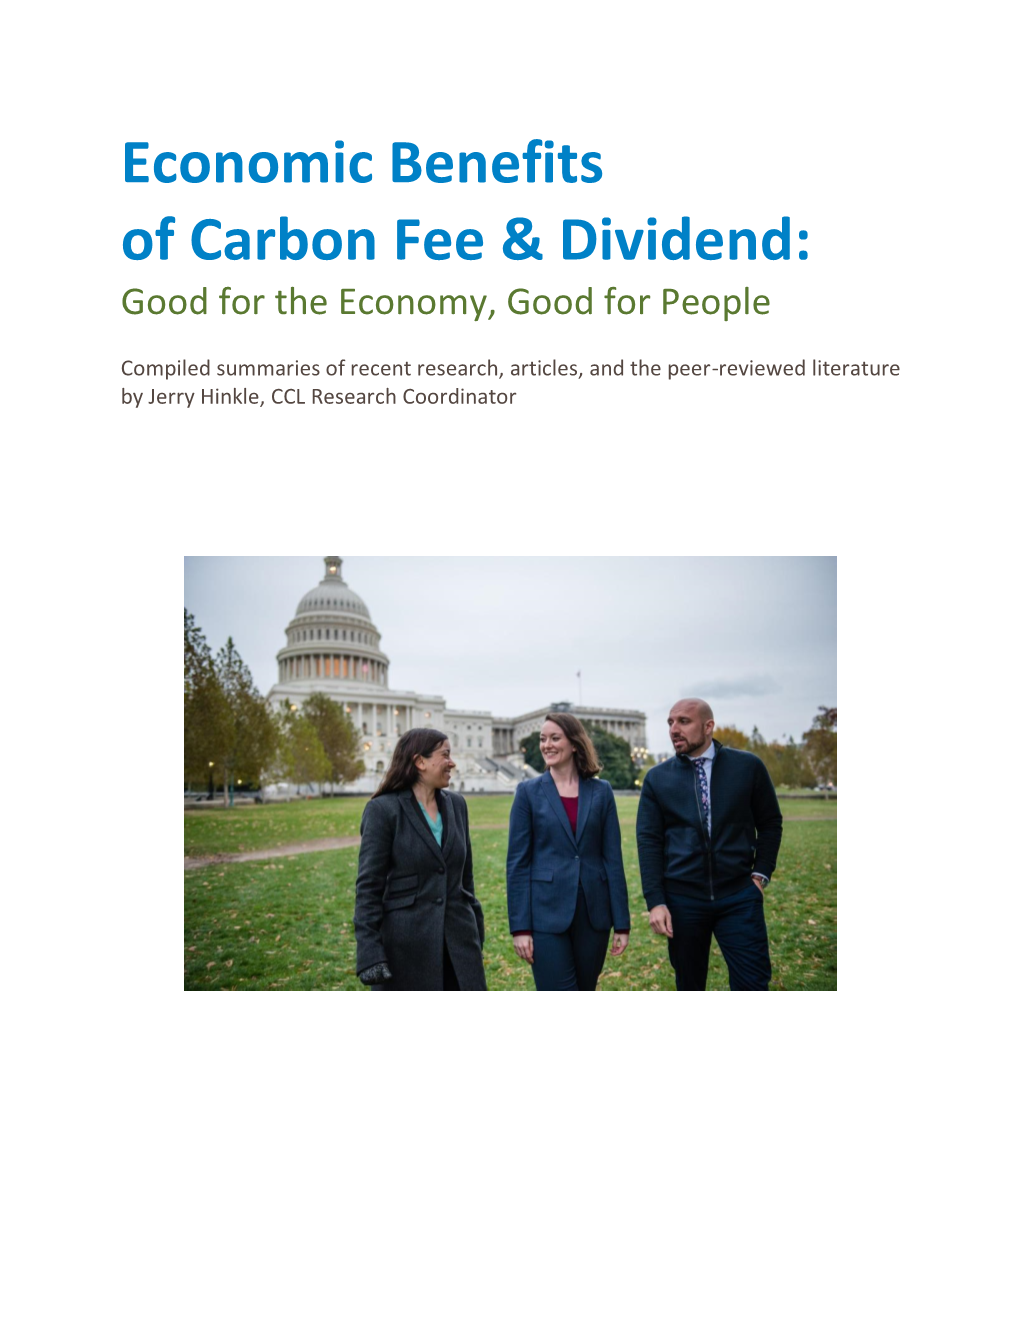 Economic Benefits of Carbon Fee & Dividend